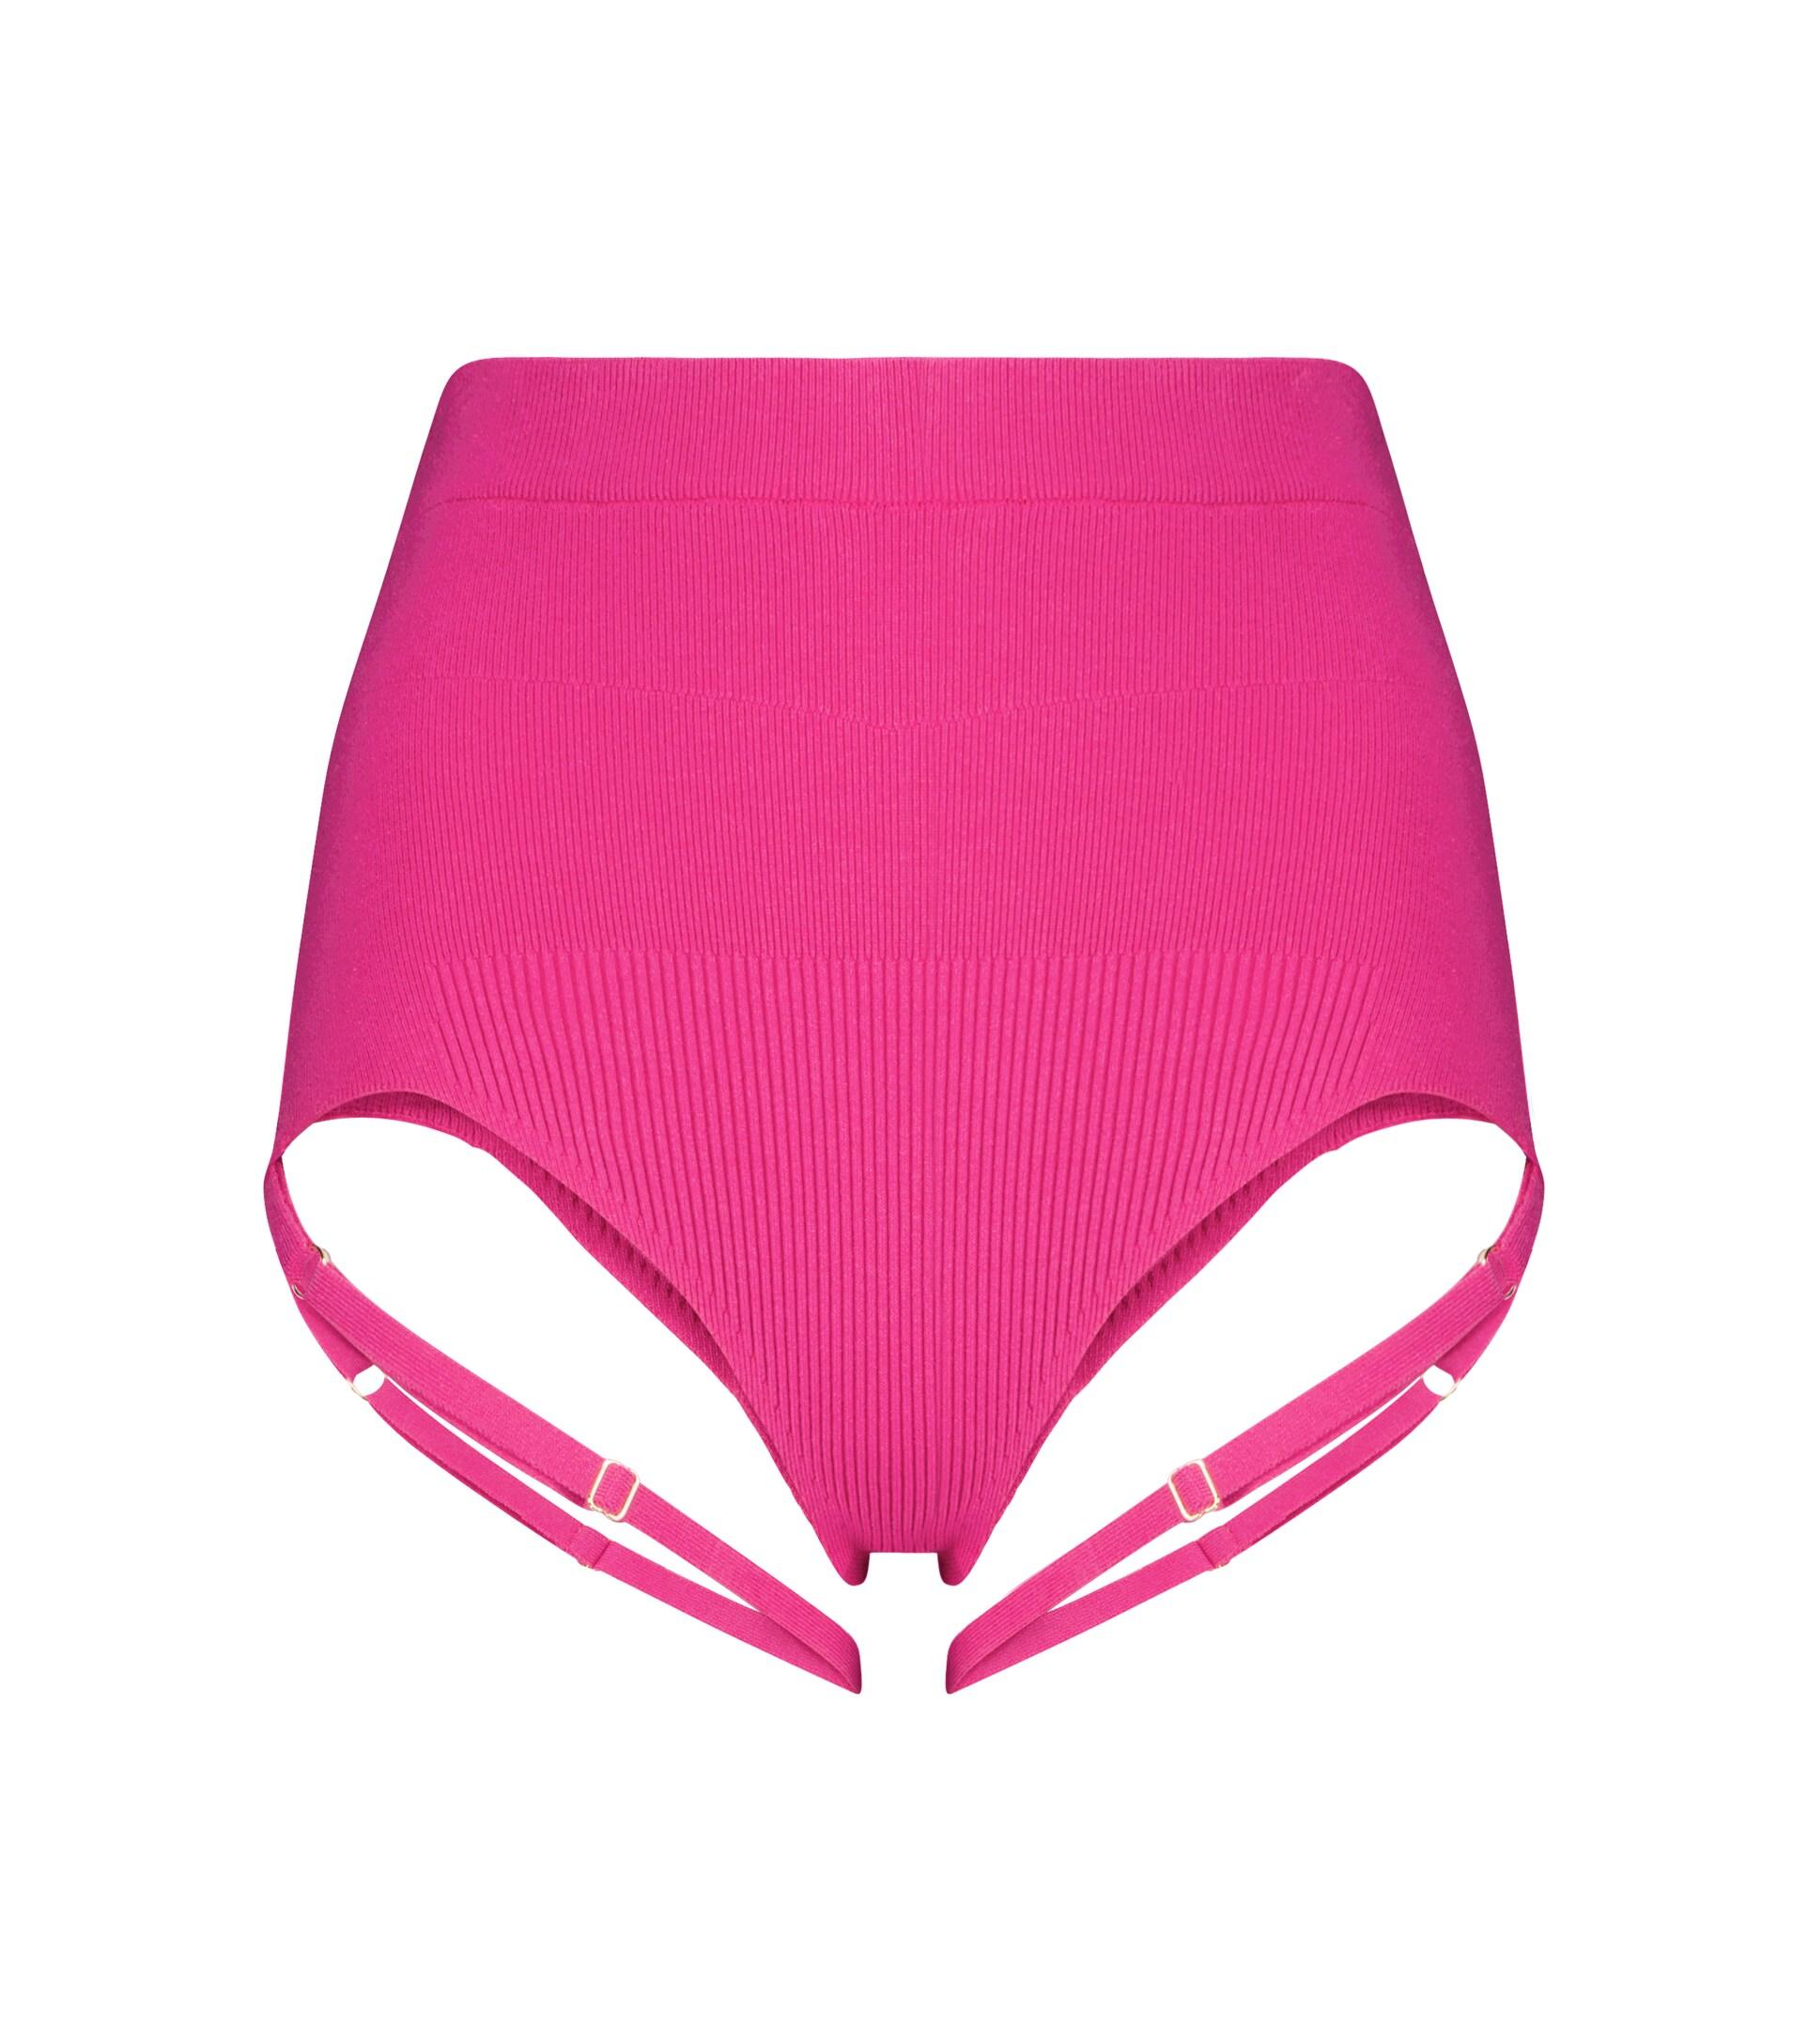 Jacquemus La Culotte Sierra Knit Briefs in Pink | Lyst